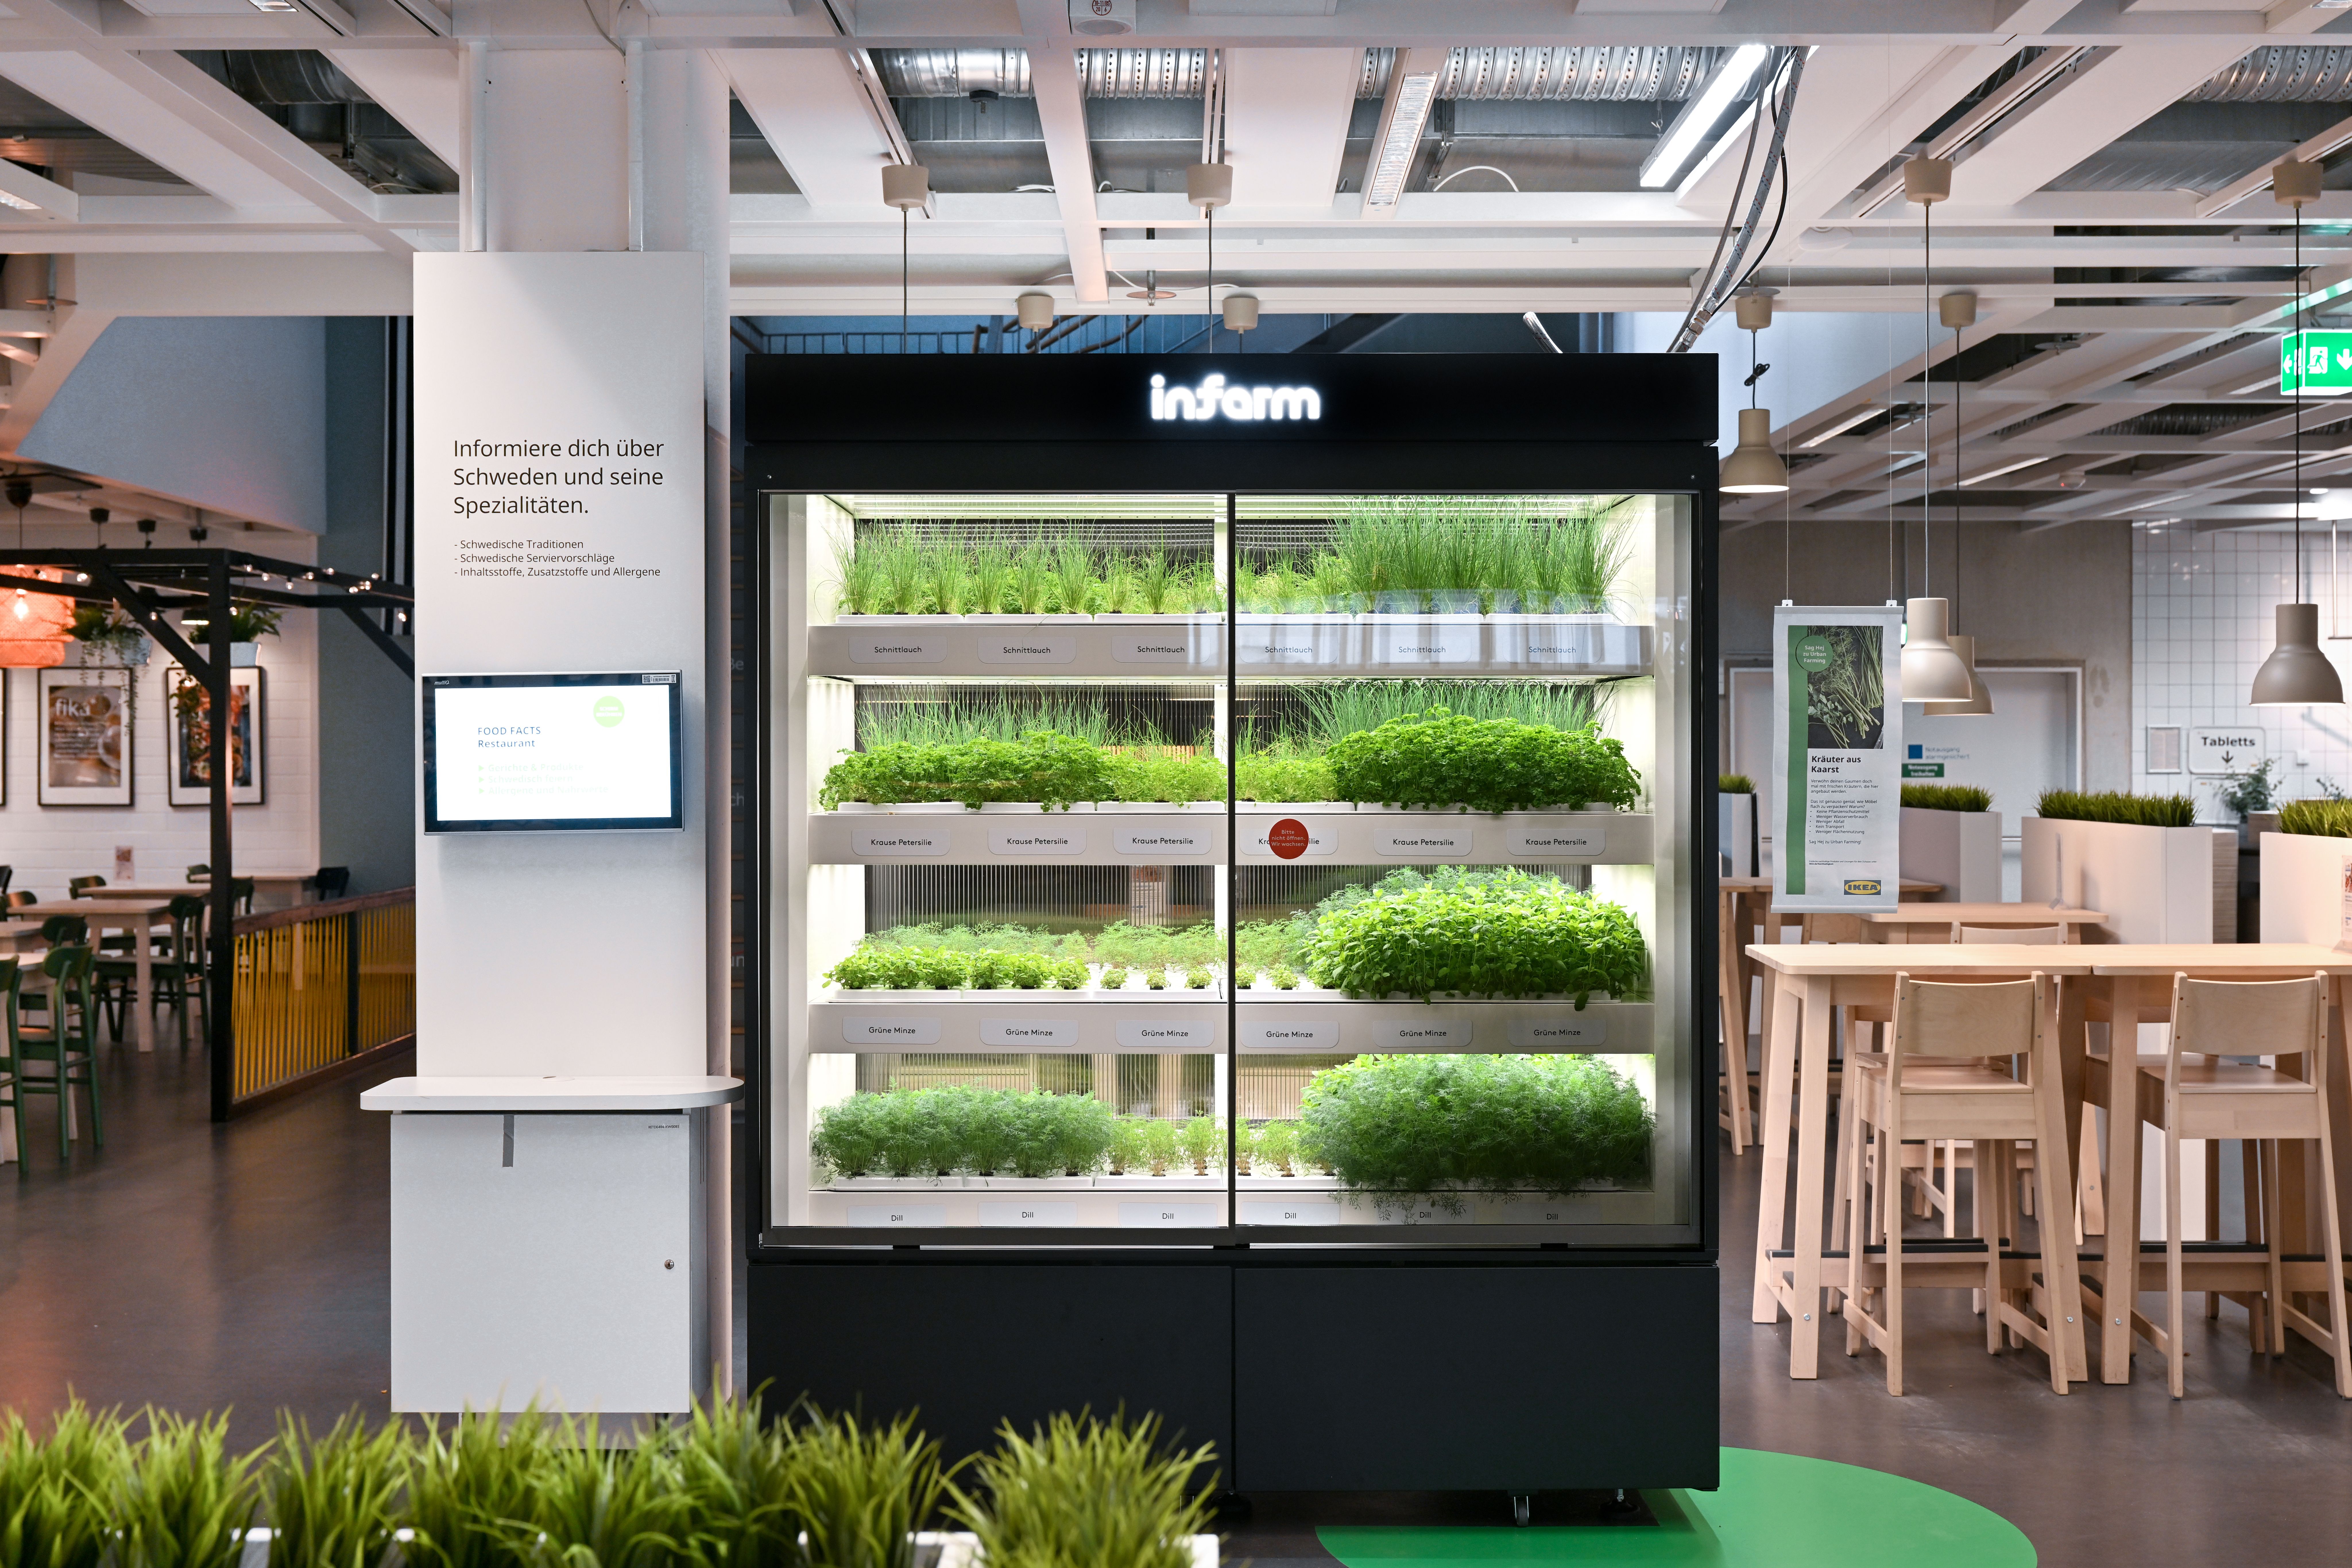 infarm fridge with greens growing